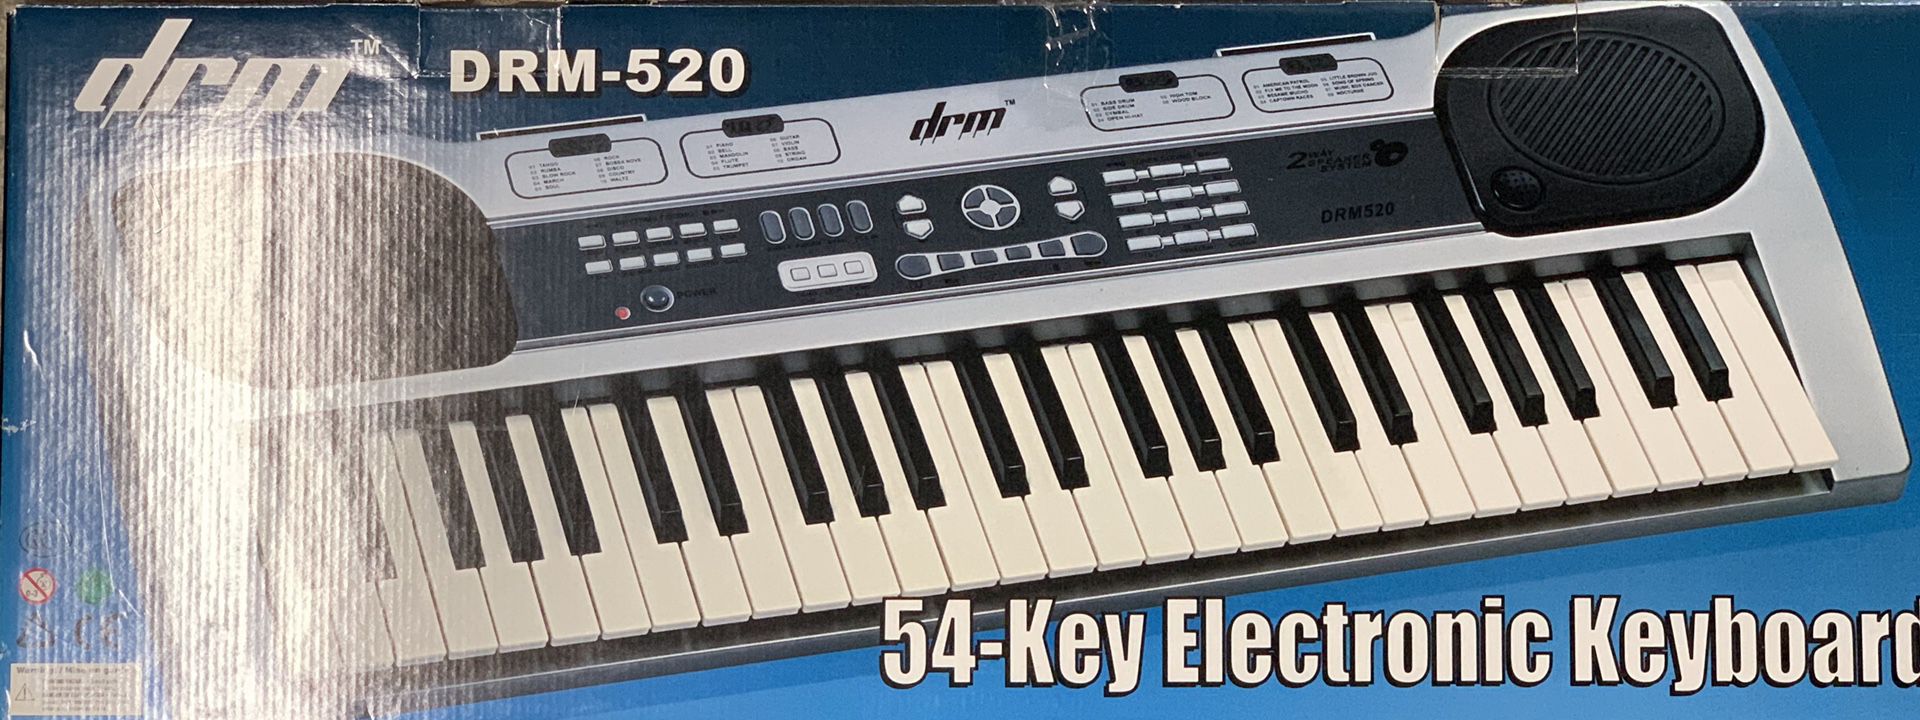 54-Key Electronic Keyboard